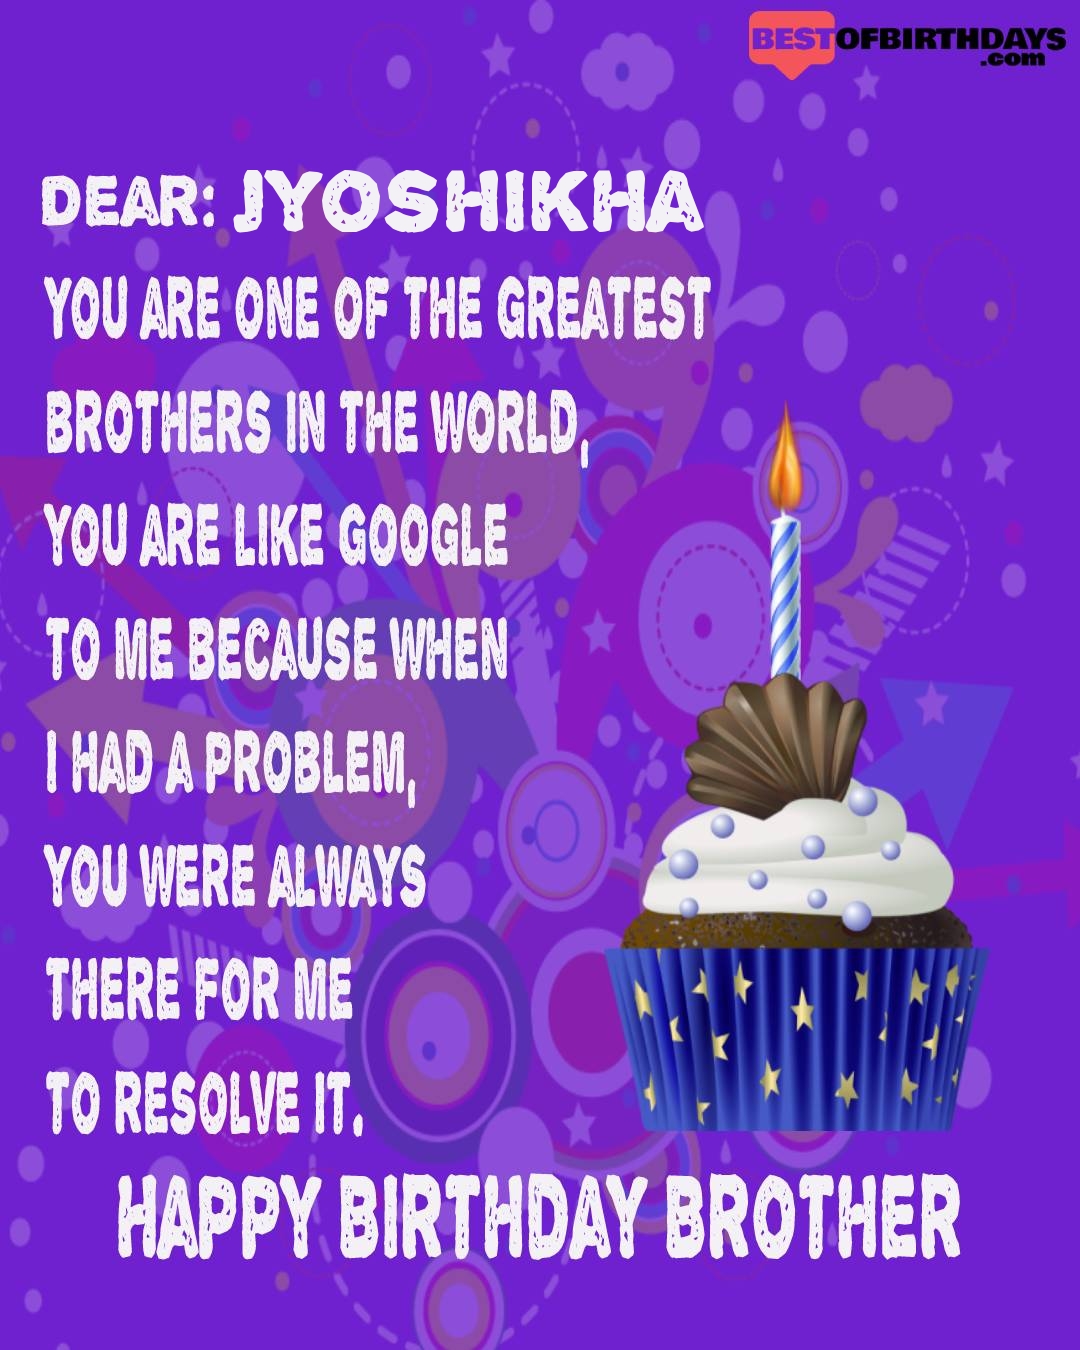 Happy birthday jyoshikha bhai brother bro